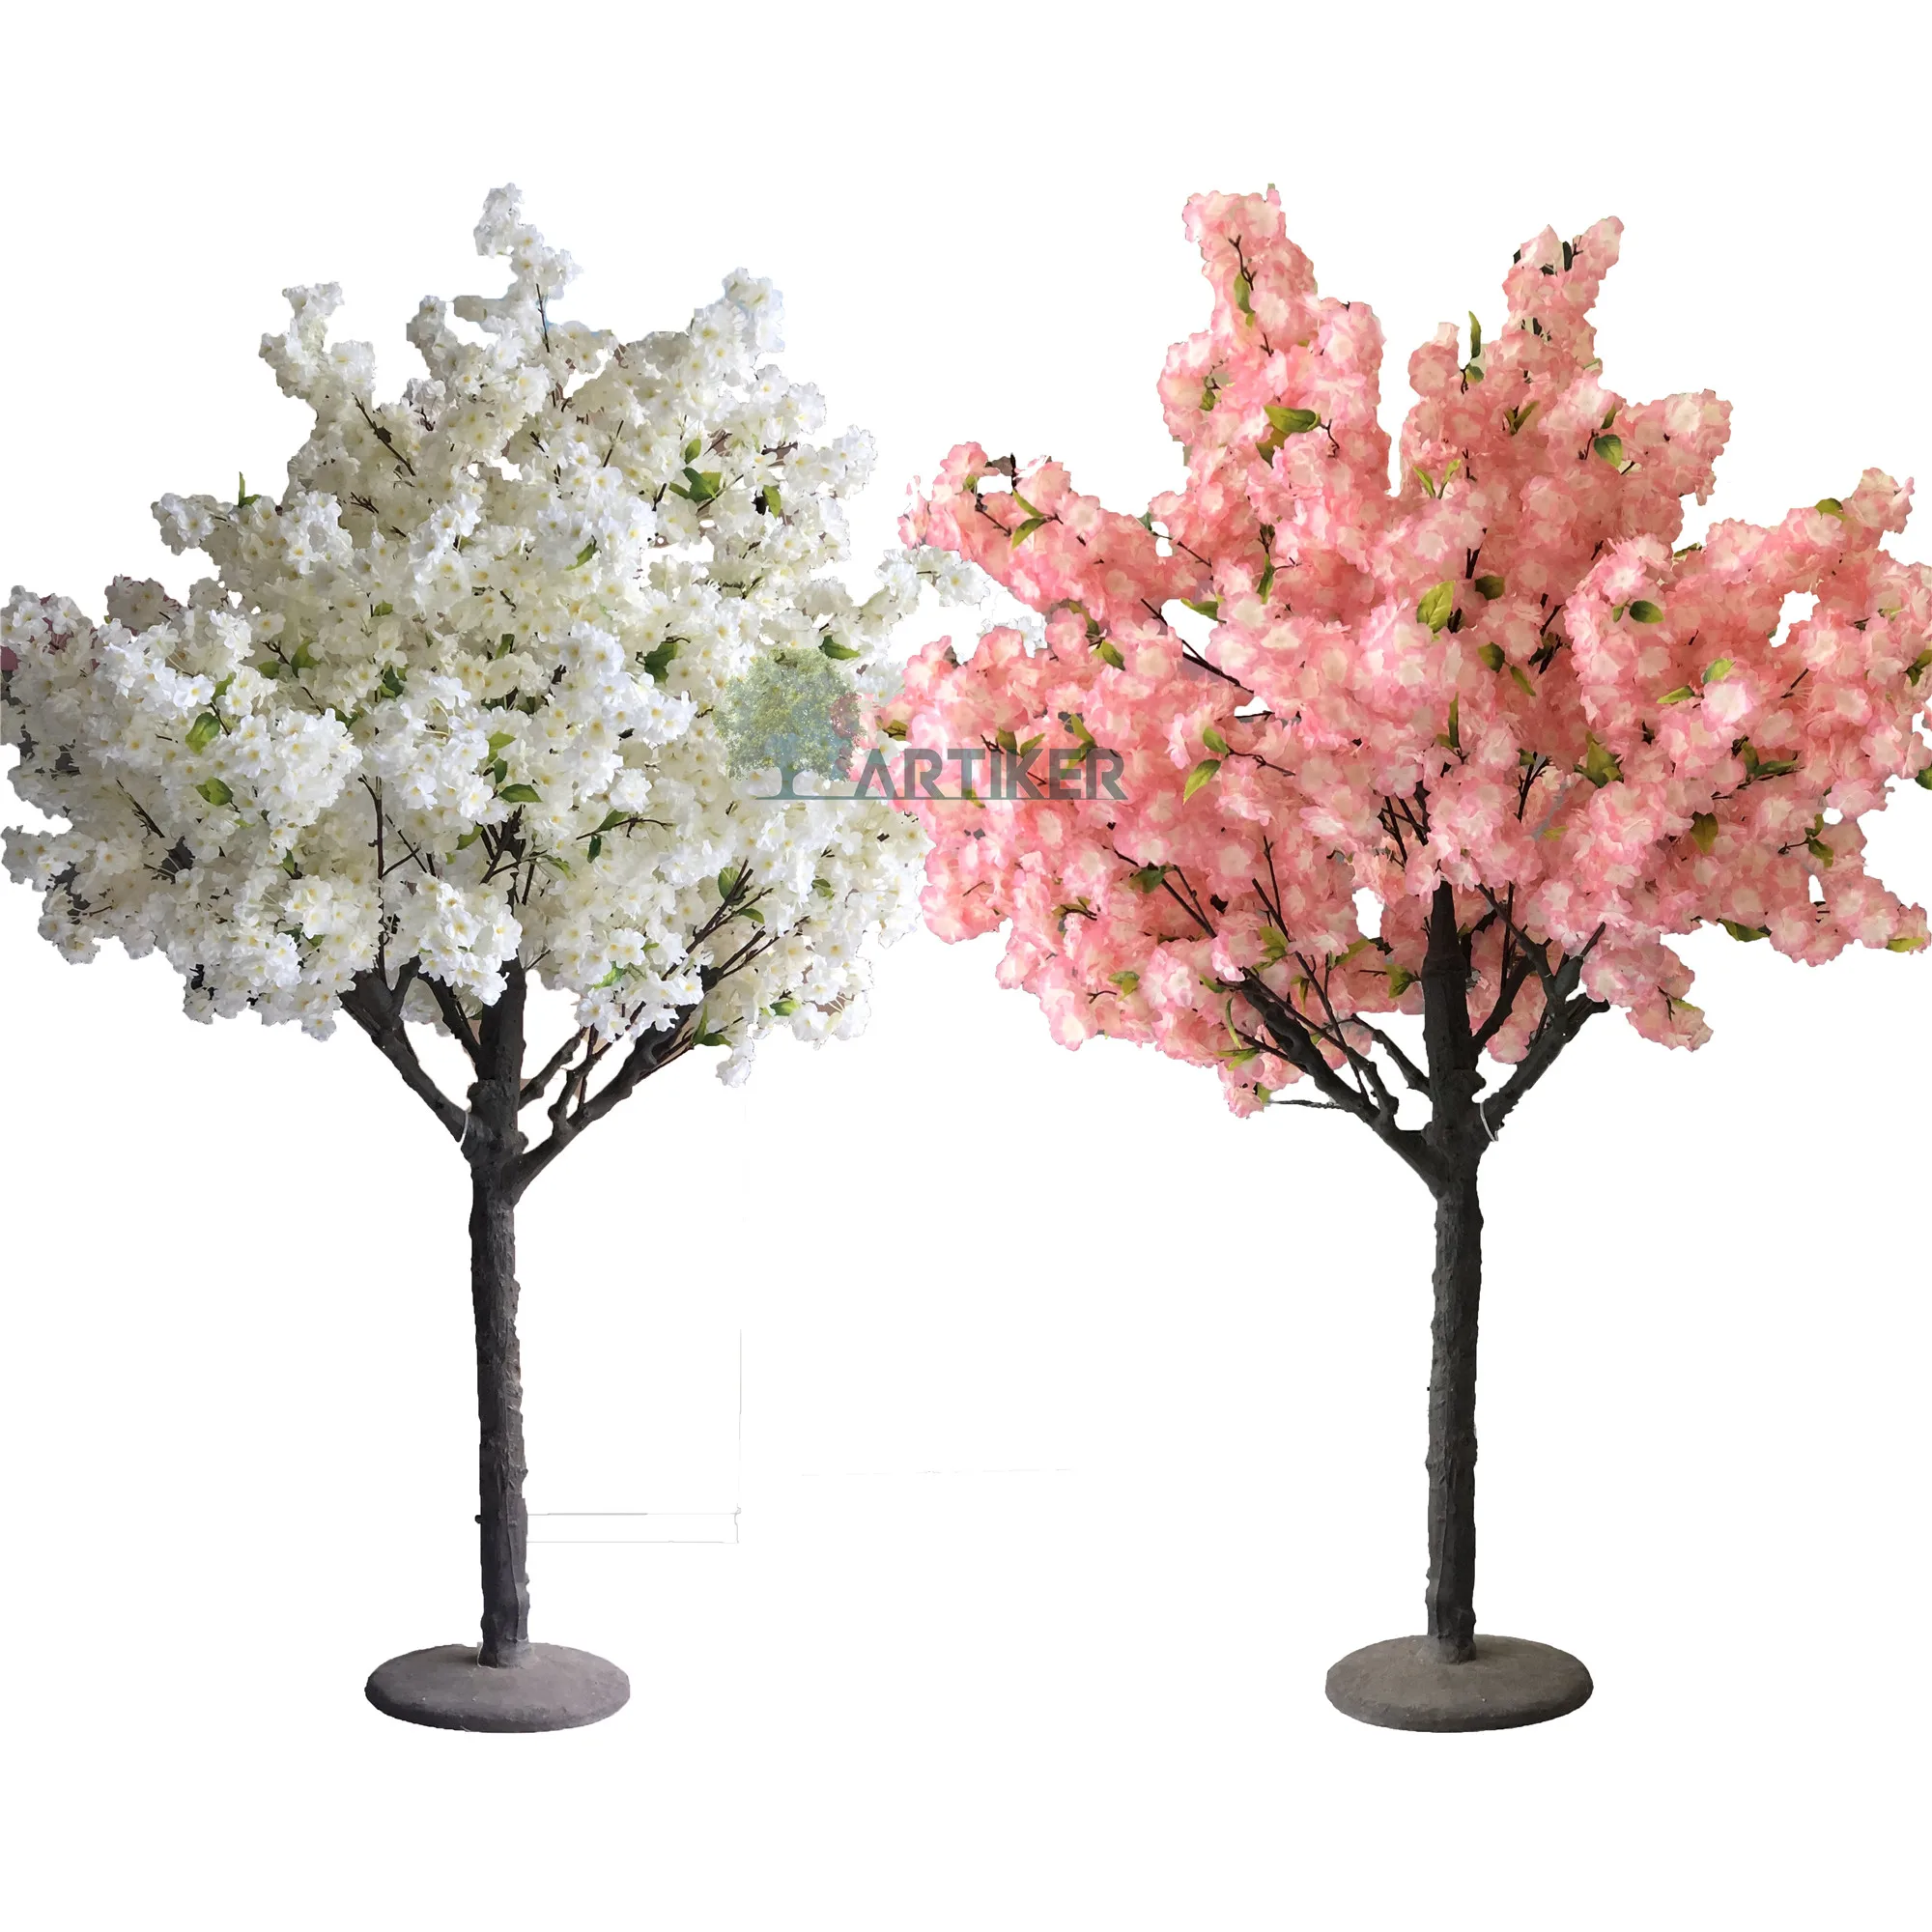 

wholesale wedding table centerpieces indoor decorative mini sakura flower artificial cherry blossom tree, Natural color + white flower